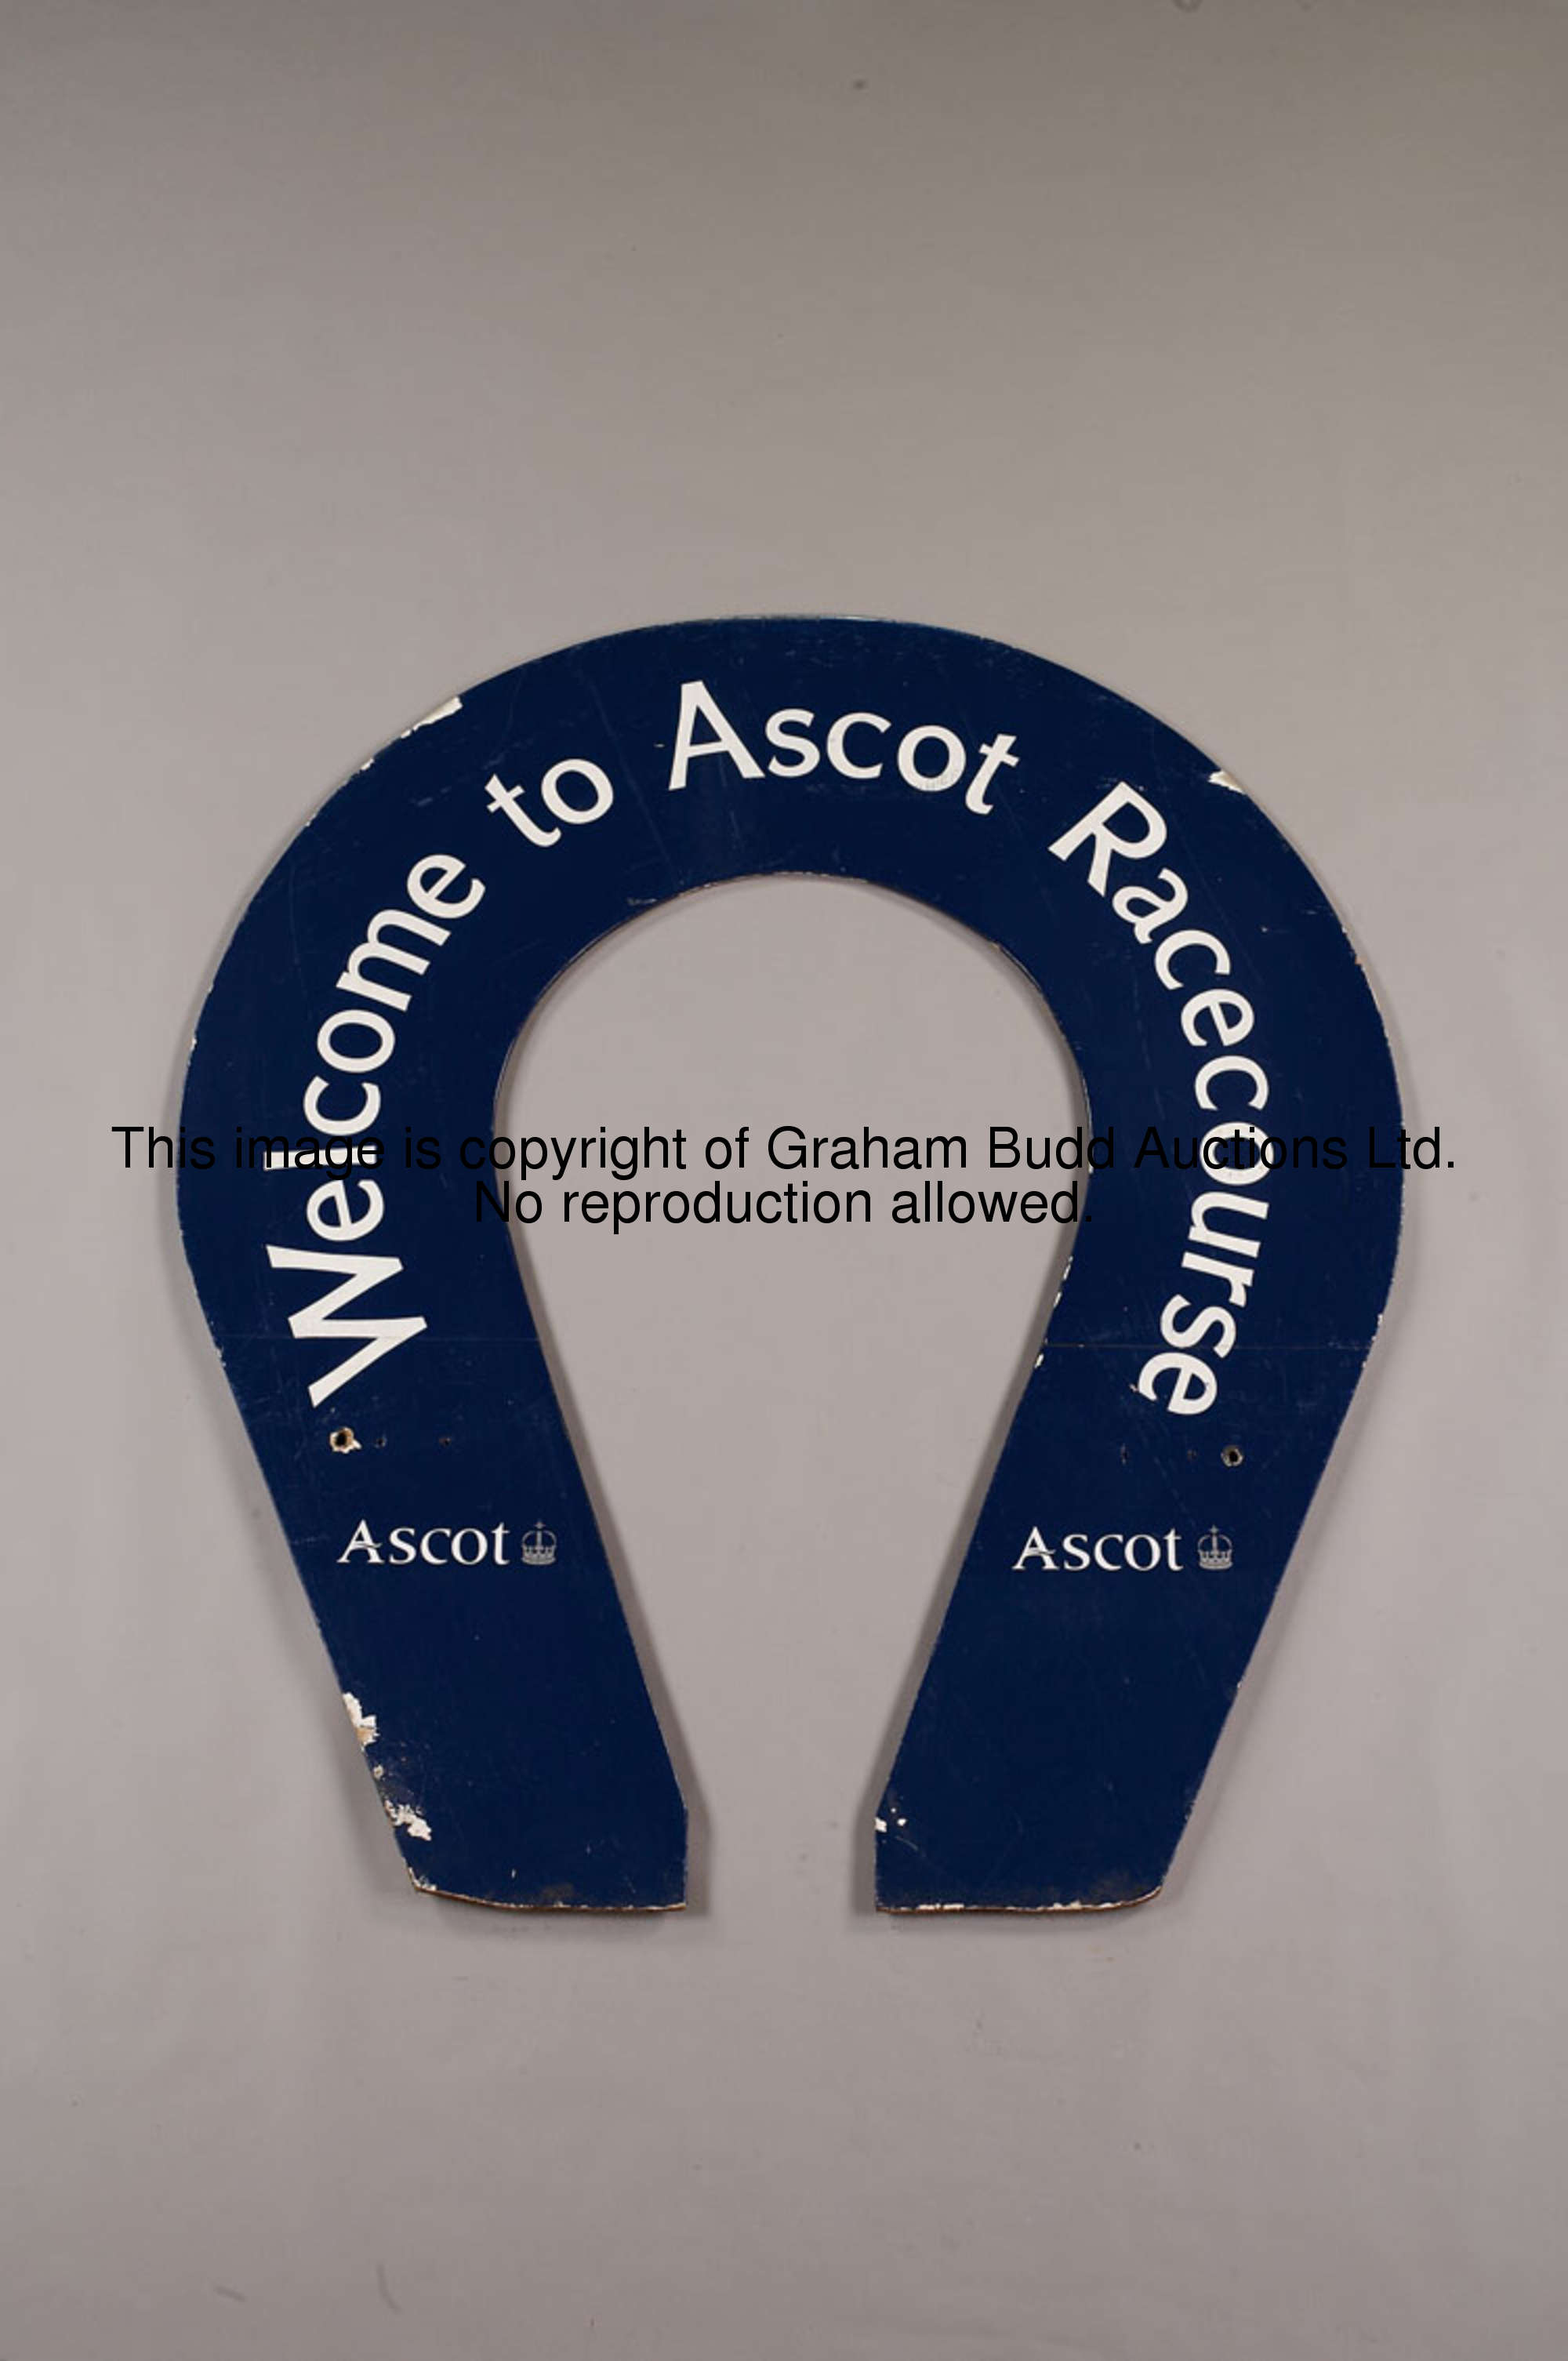 Welcome to Ascot Racecourse winning post backboard horse shoe-shaped, bearing Ascot logo, white lett...